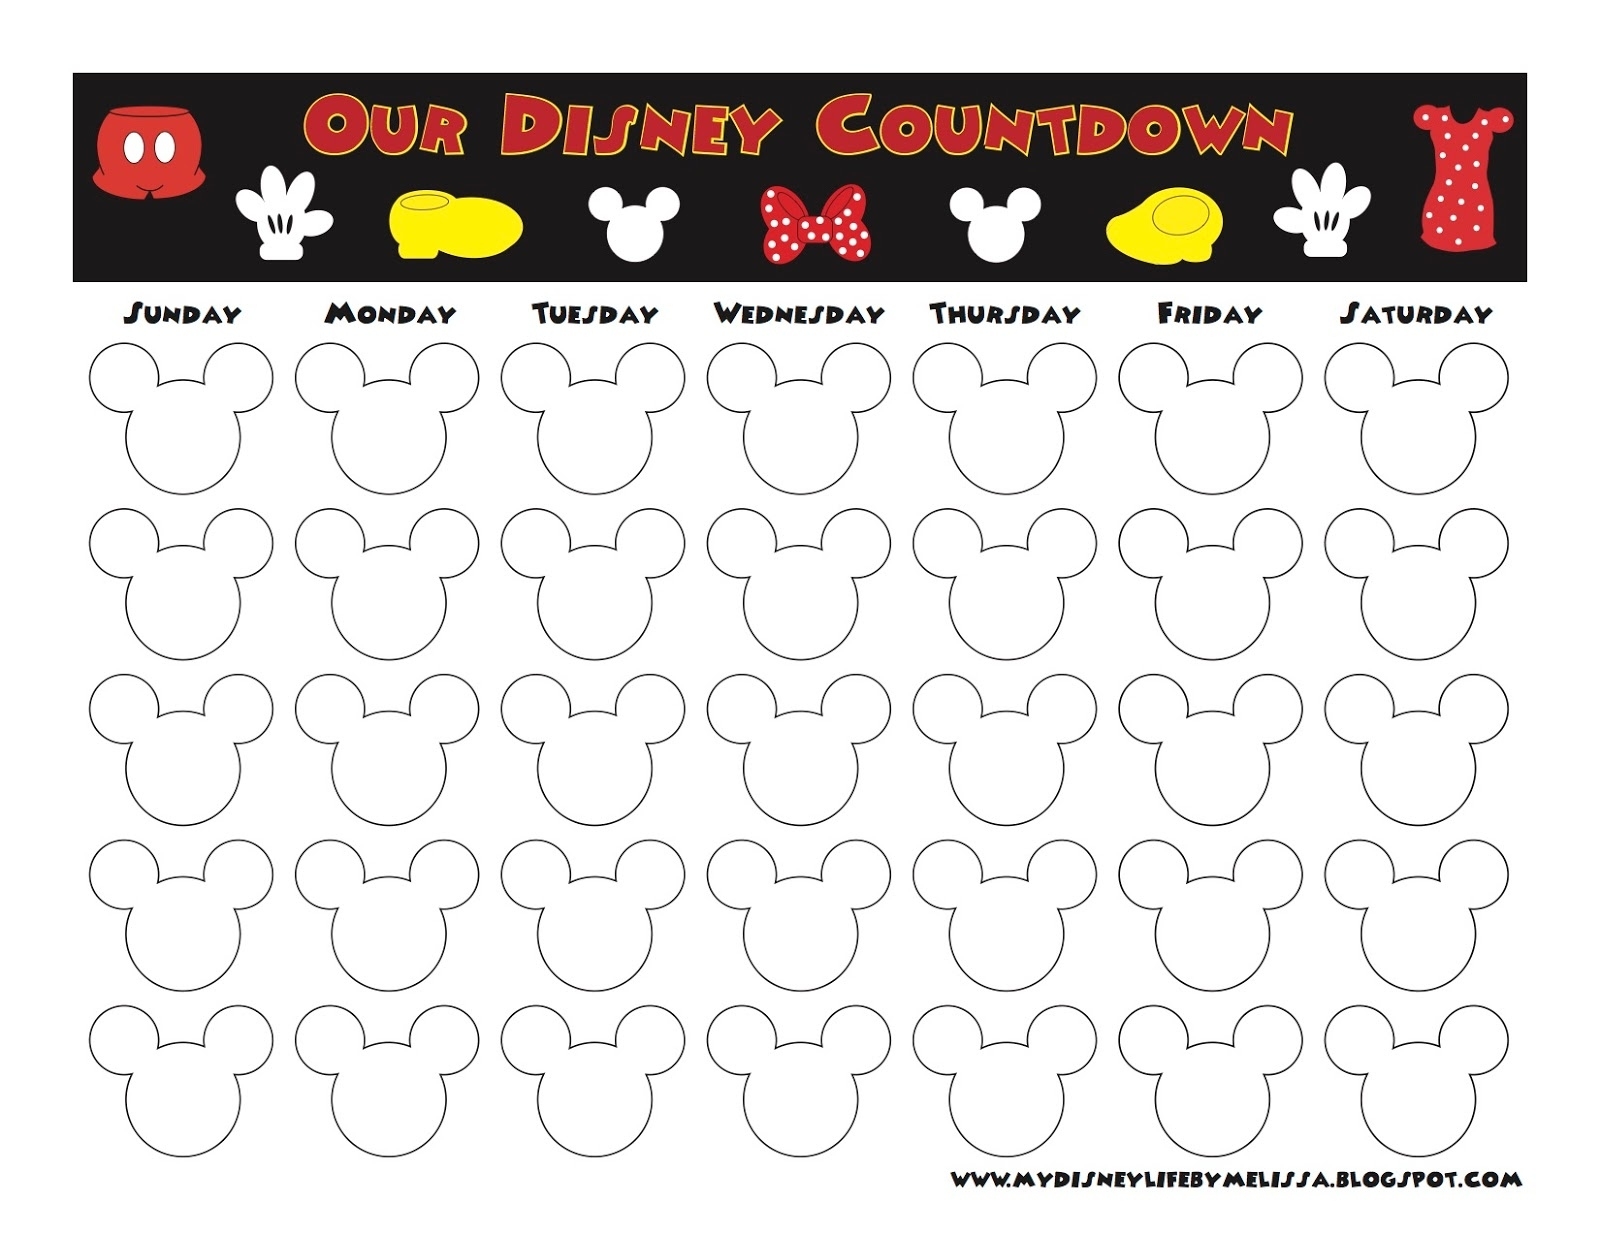 My Disney Life: Countdown Calendars Calendar Countdown Free Download